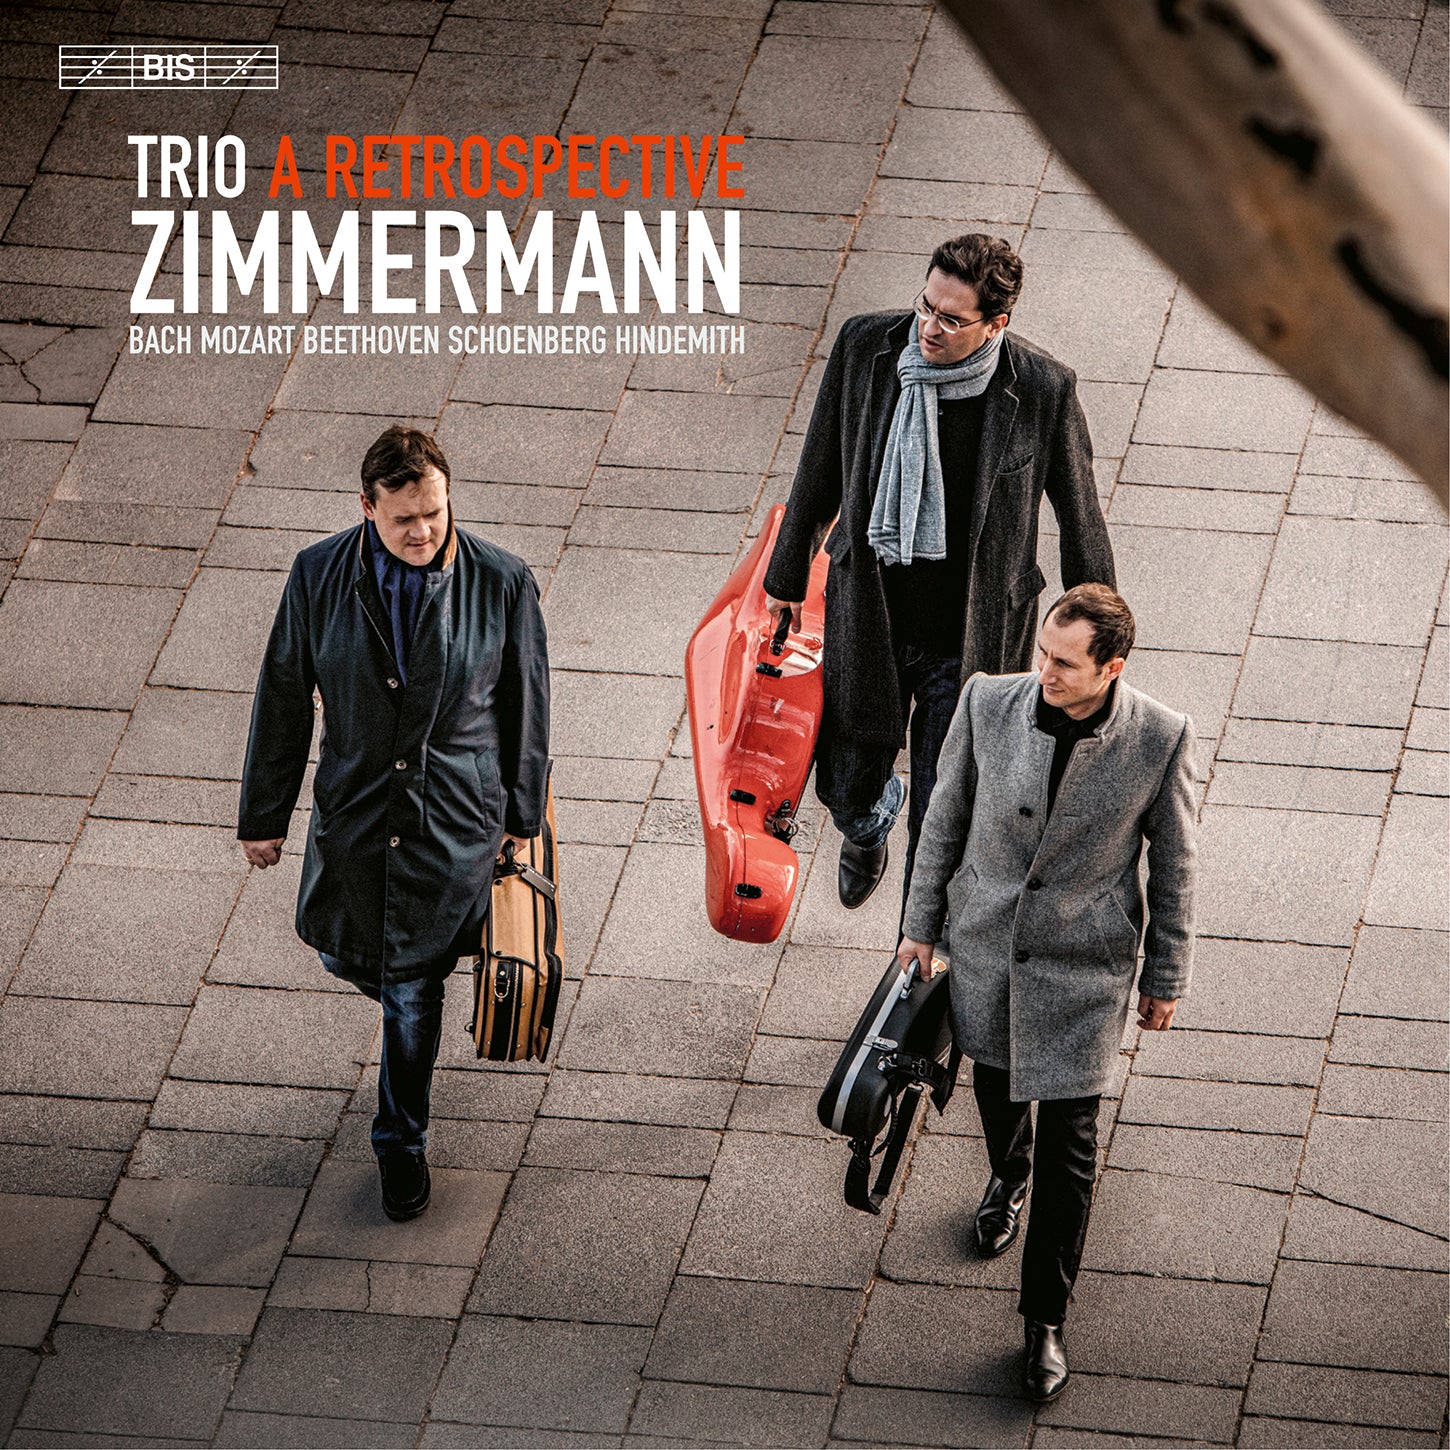 A Retrospective / Trio Zimmermann